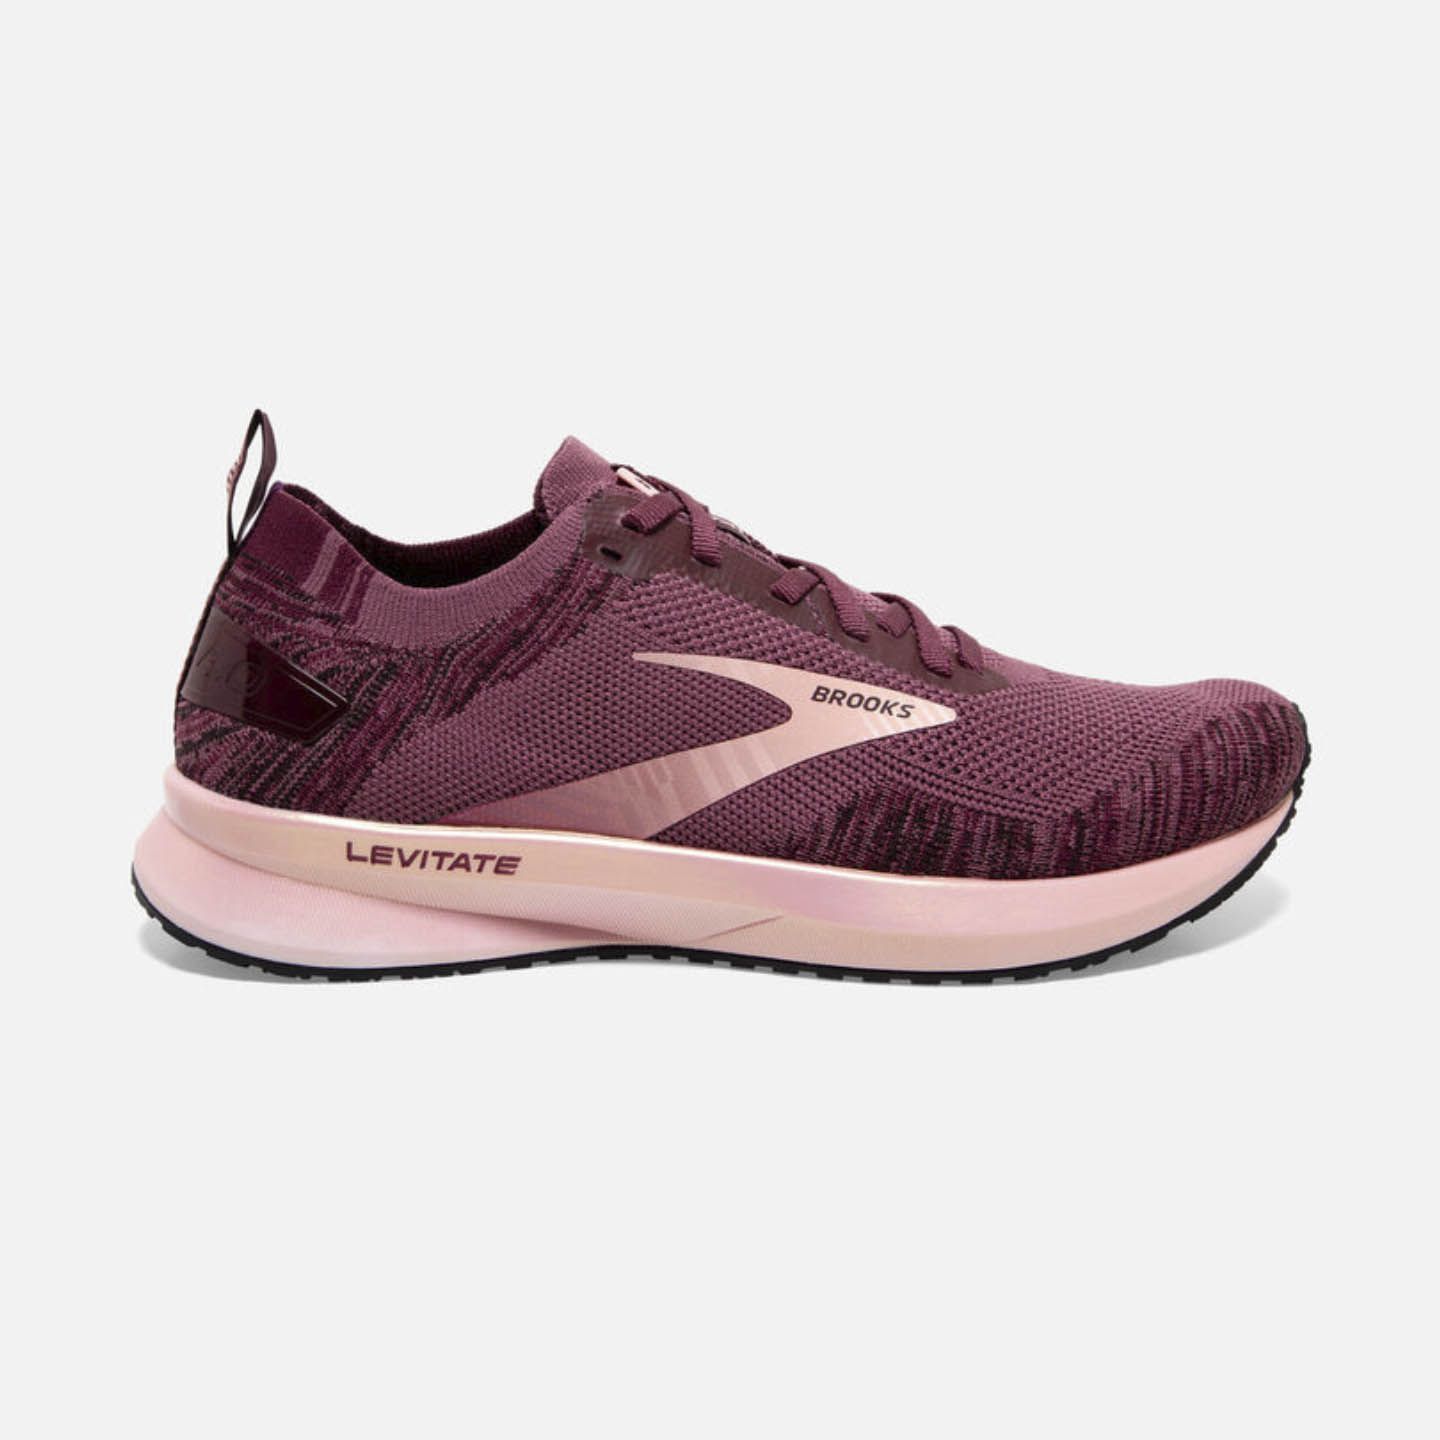 The Best Women S Running Shoes 21